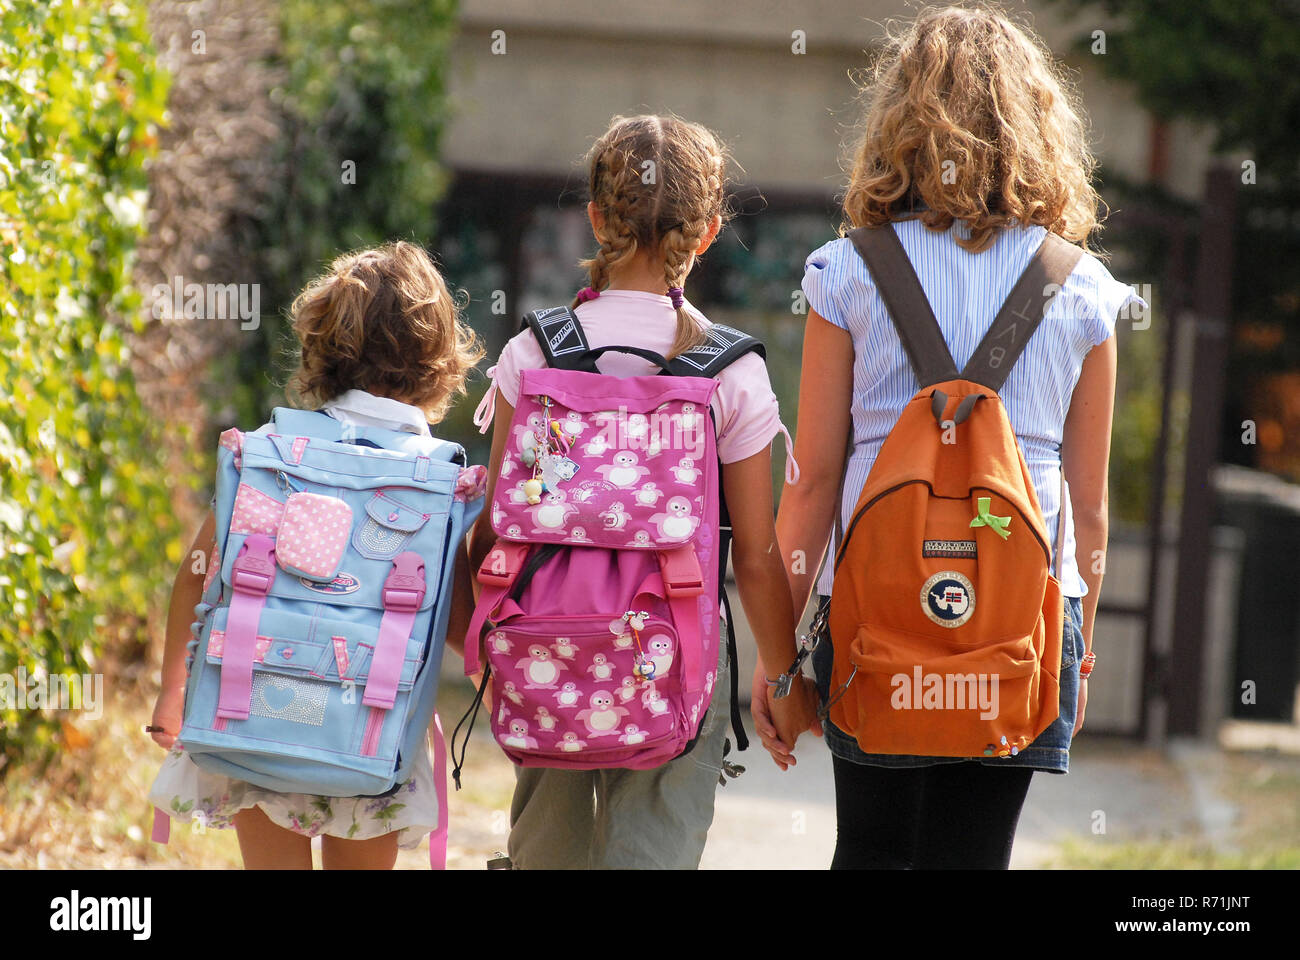 Group of schoolchilds with backpacks    Photo © Daiano Cristini/Sintesi/Alamy Stock Photo Stock Photo